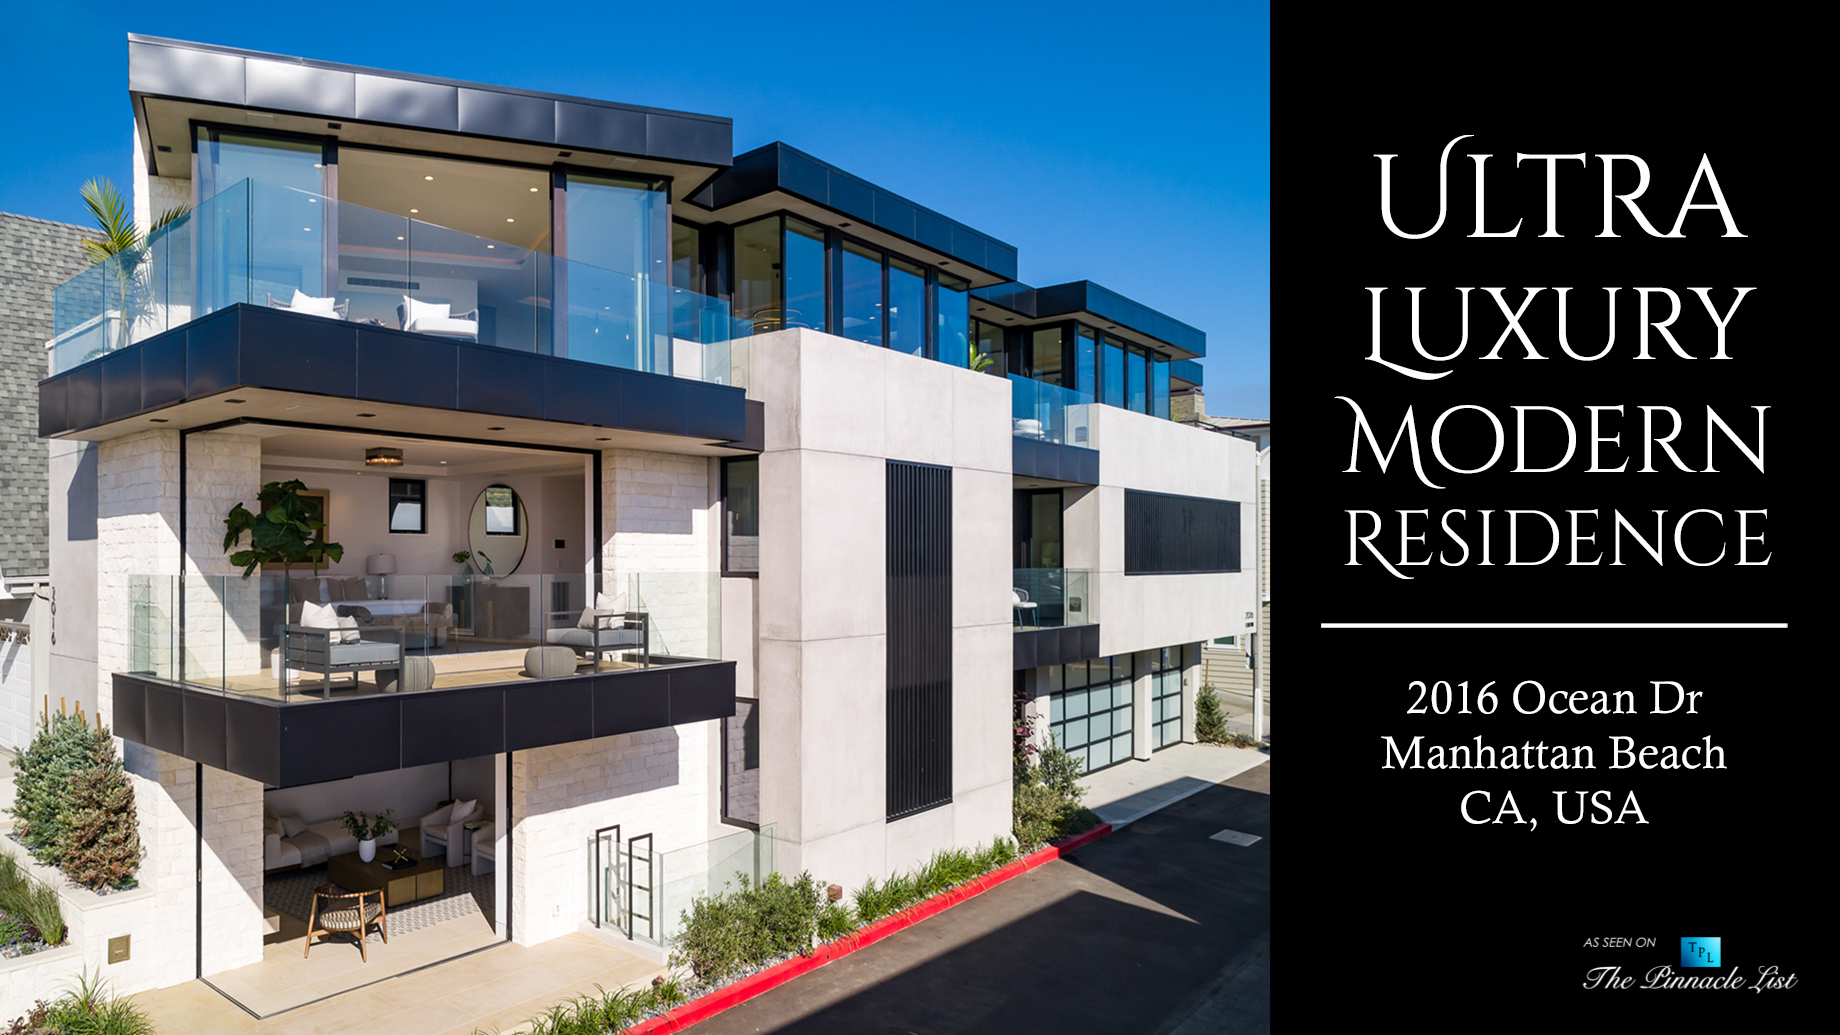 Ultra Modern Luxury Residence – 2016 Ocean Dr, Manhattan Beach, CA, USA